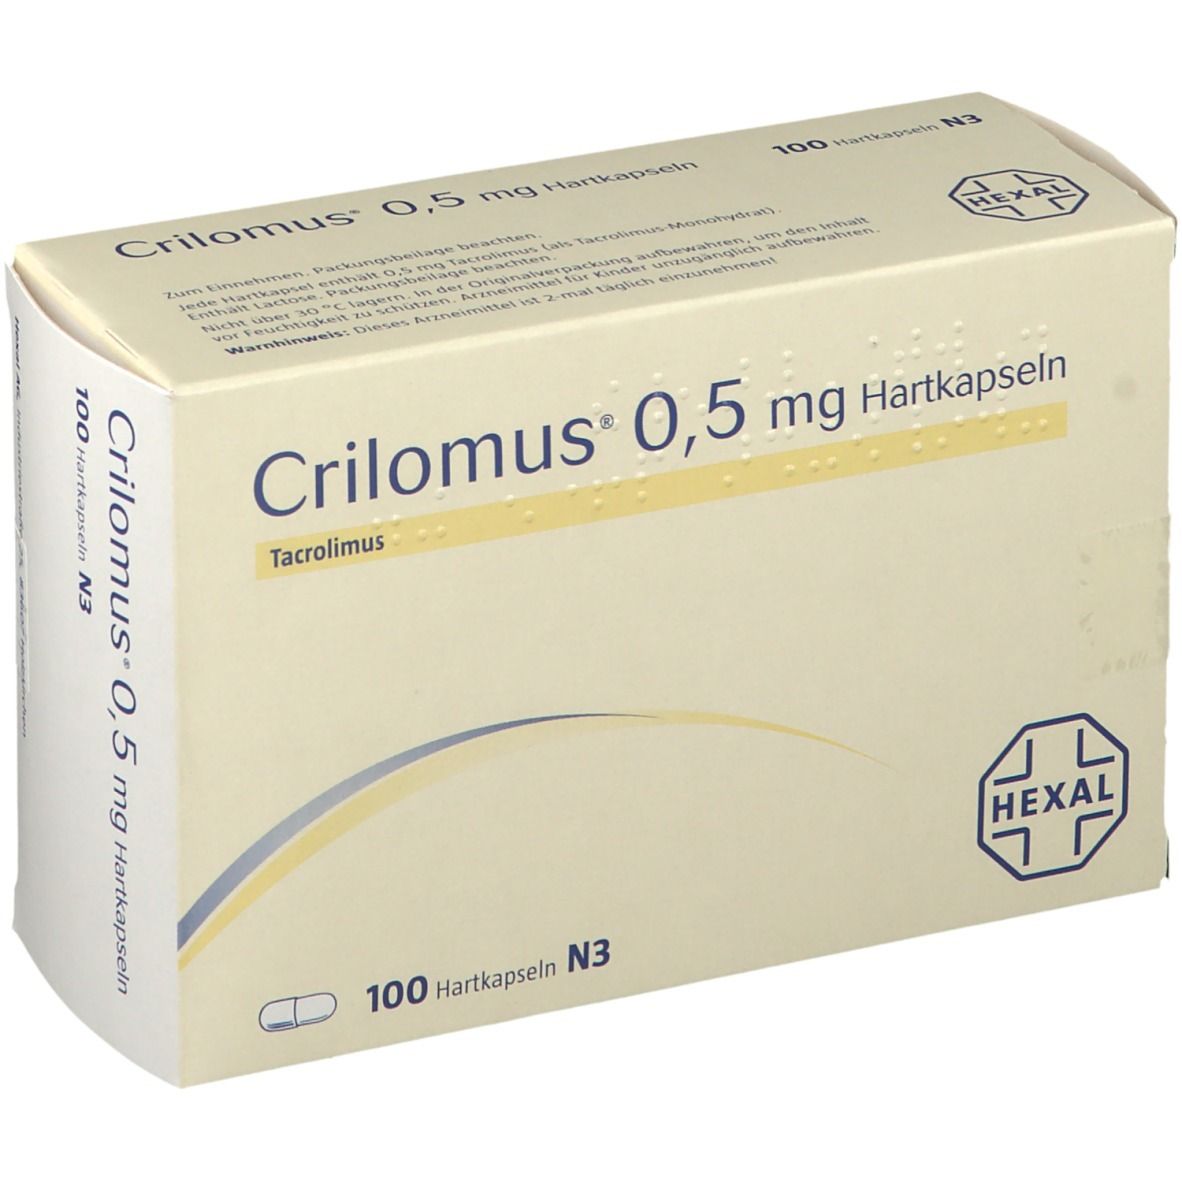 Crilomus® 0,5 mg